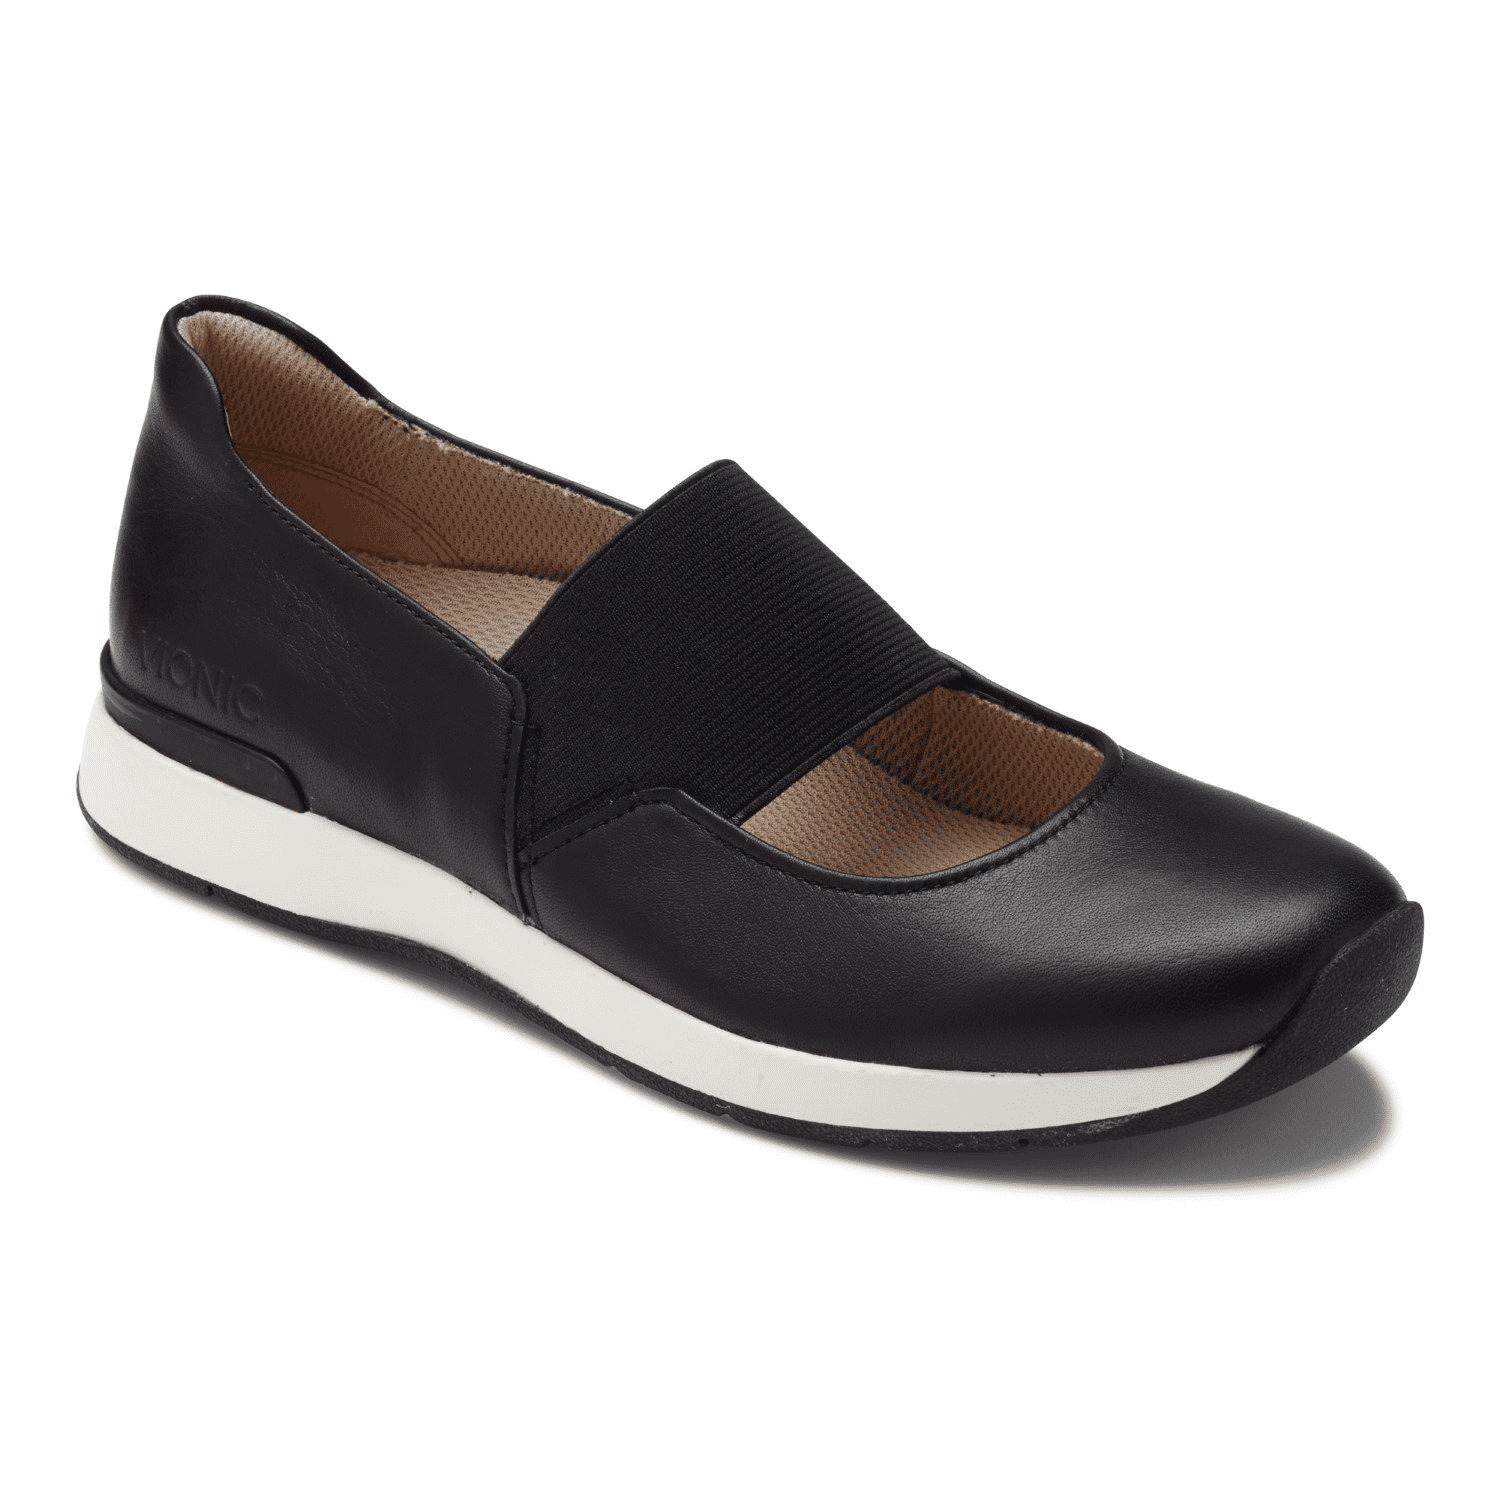 NEW Vionic CADEE Mary Jane Walking Shoes~BLACK~Sz 8 M~Orthotic Arch Support~MIB